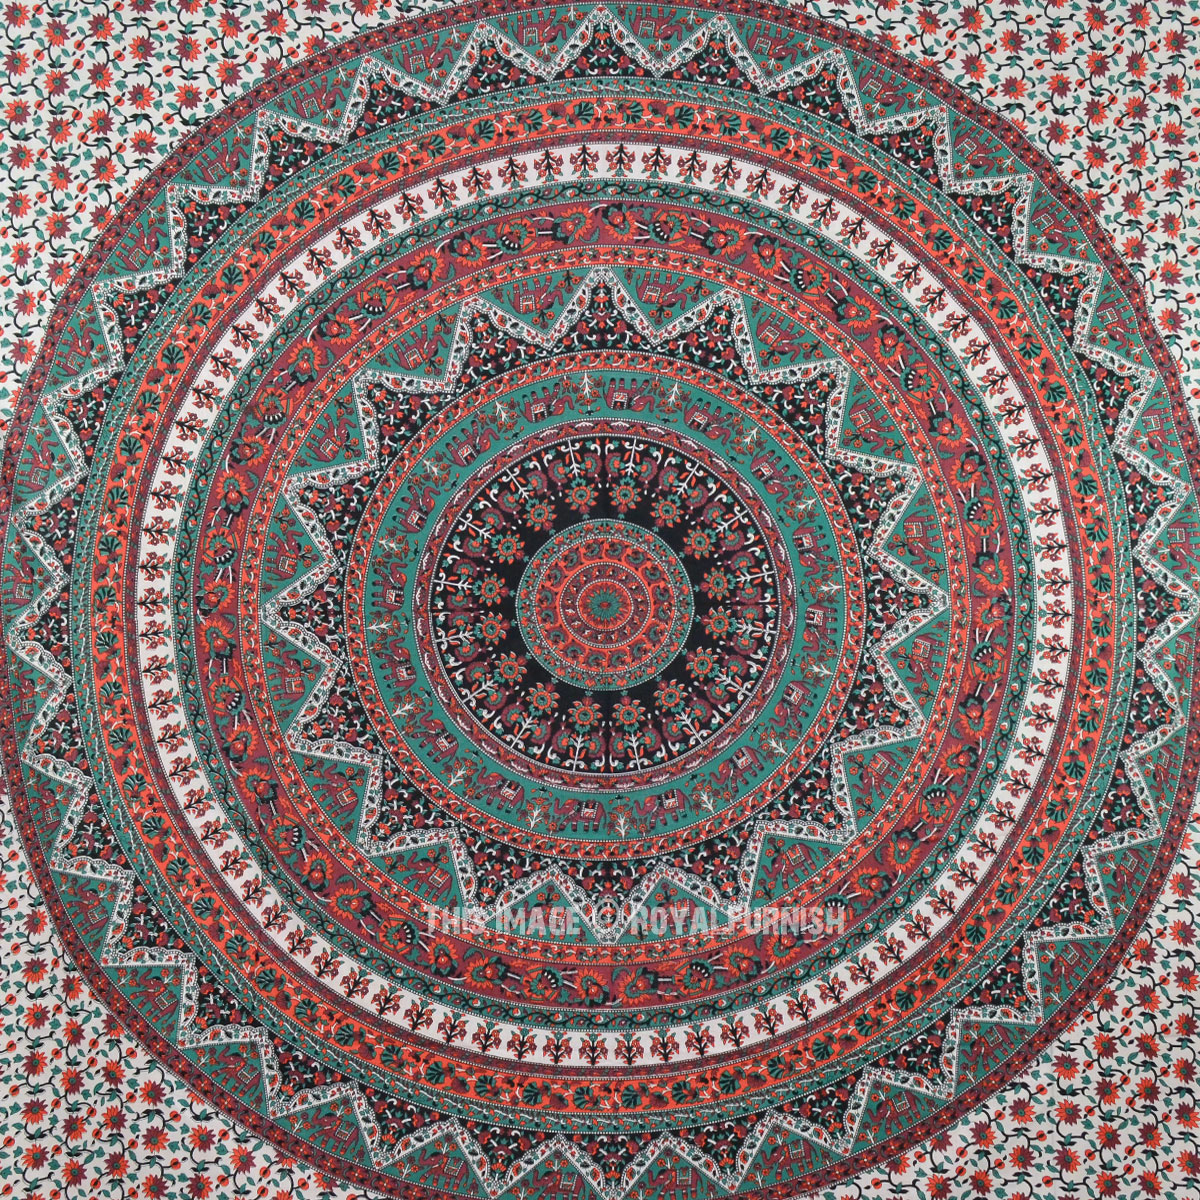 Cool Boho Medallion Circle Mandala Wall Tapestry, Indian à Mandala 